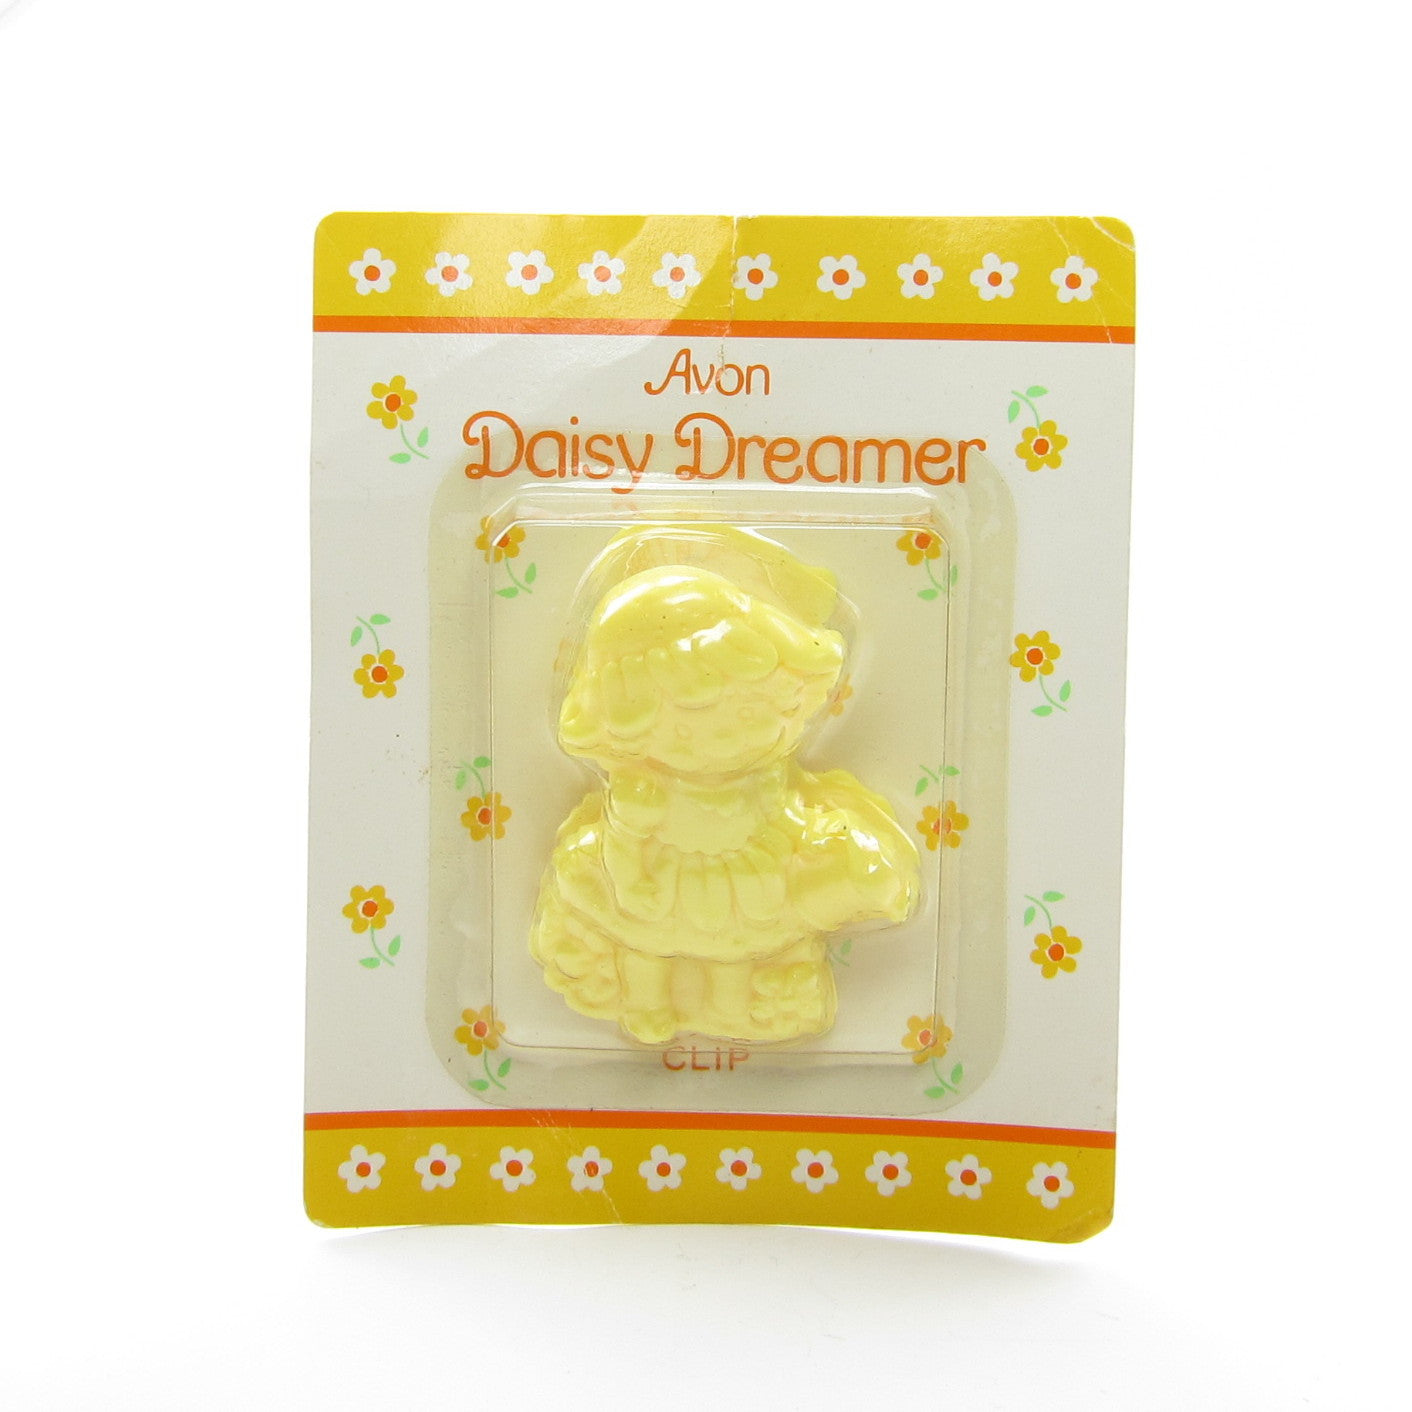 Daisy Dreamer Avon Little Blossom plastic clip